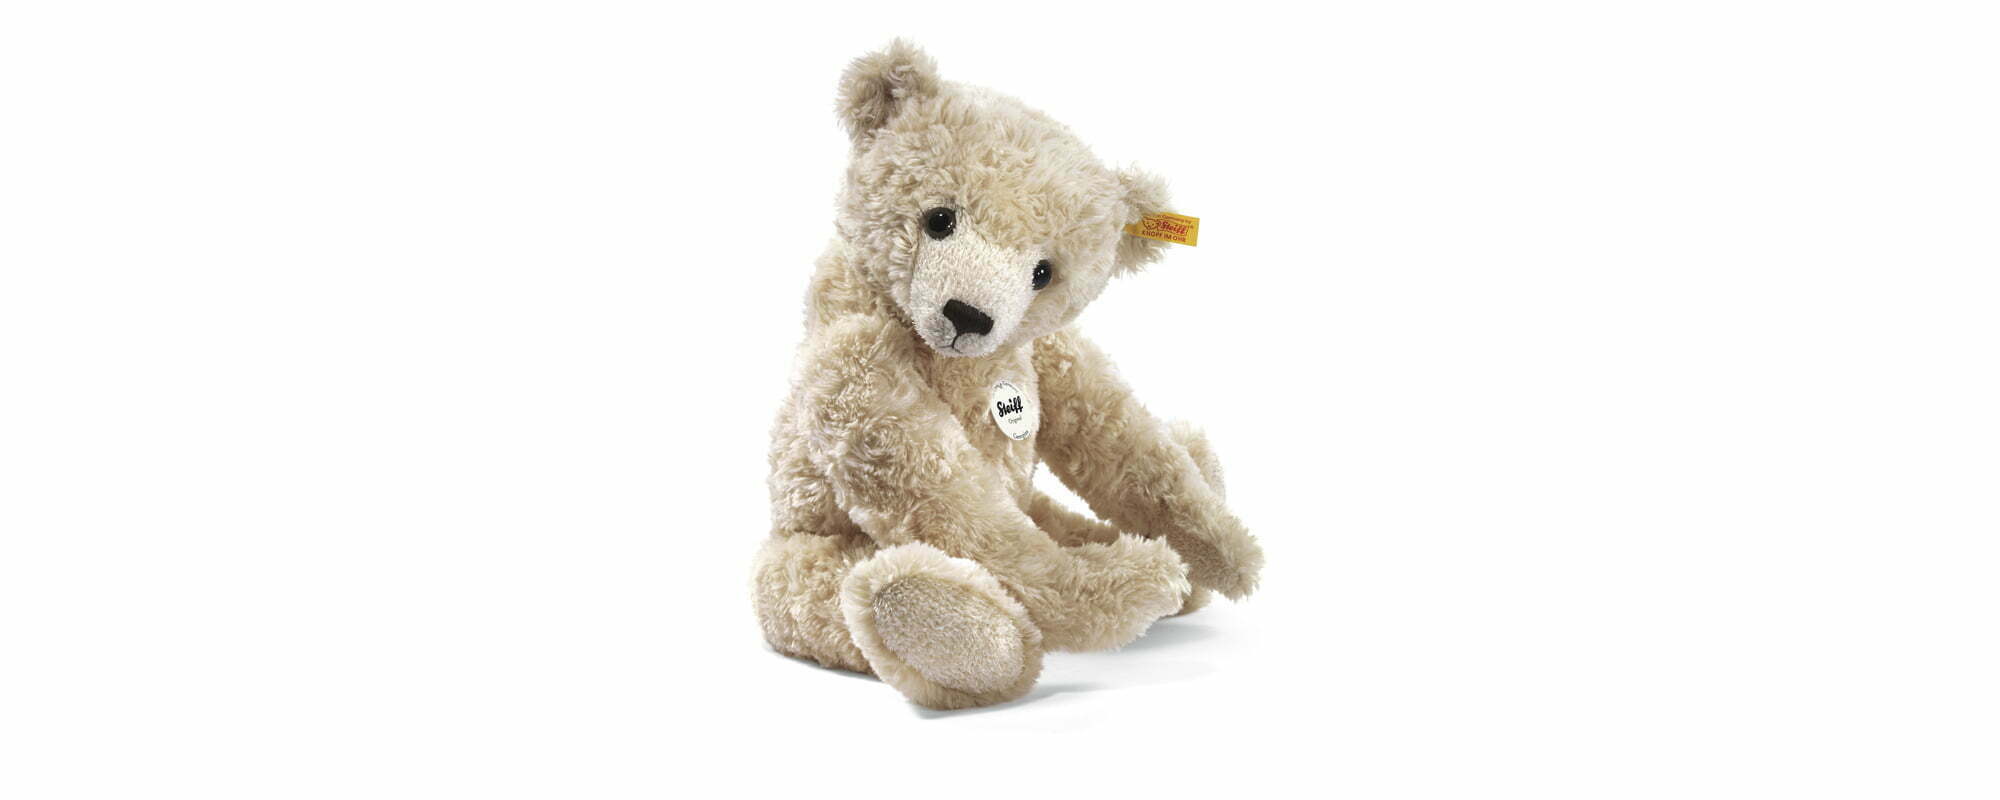 Teddy bear from Margareta's dollhouse Glasriket